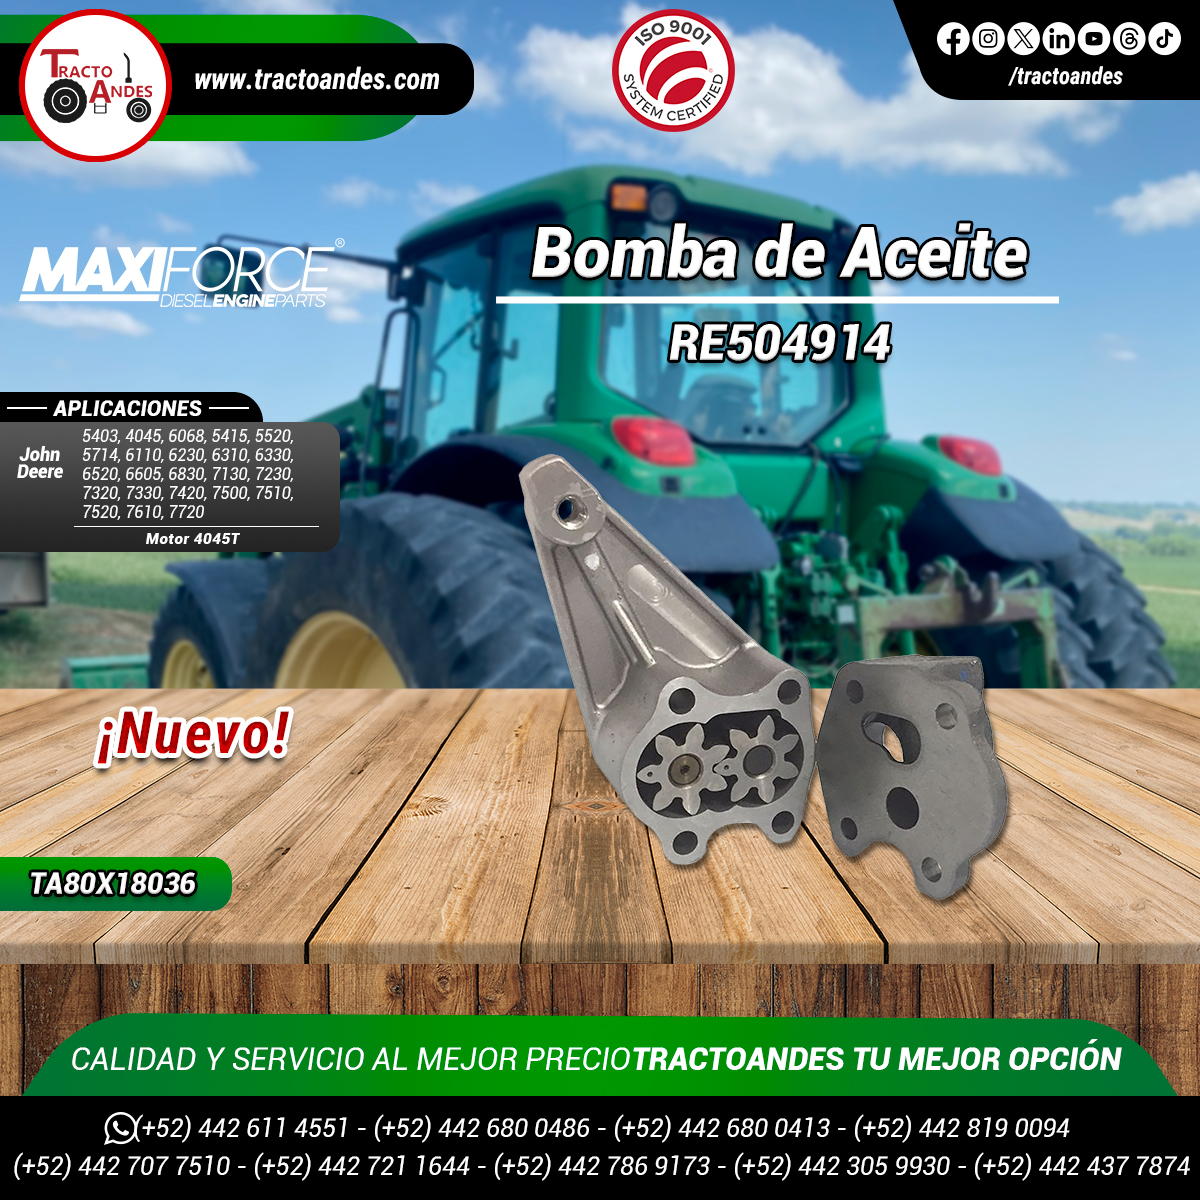 BOMBA-DE-ACEITE-TA80X18036-RE504914